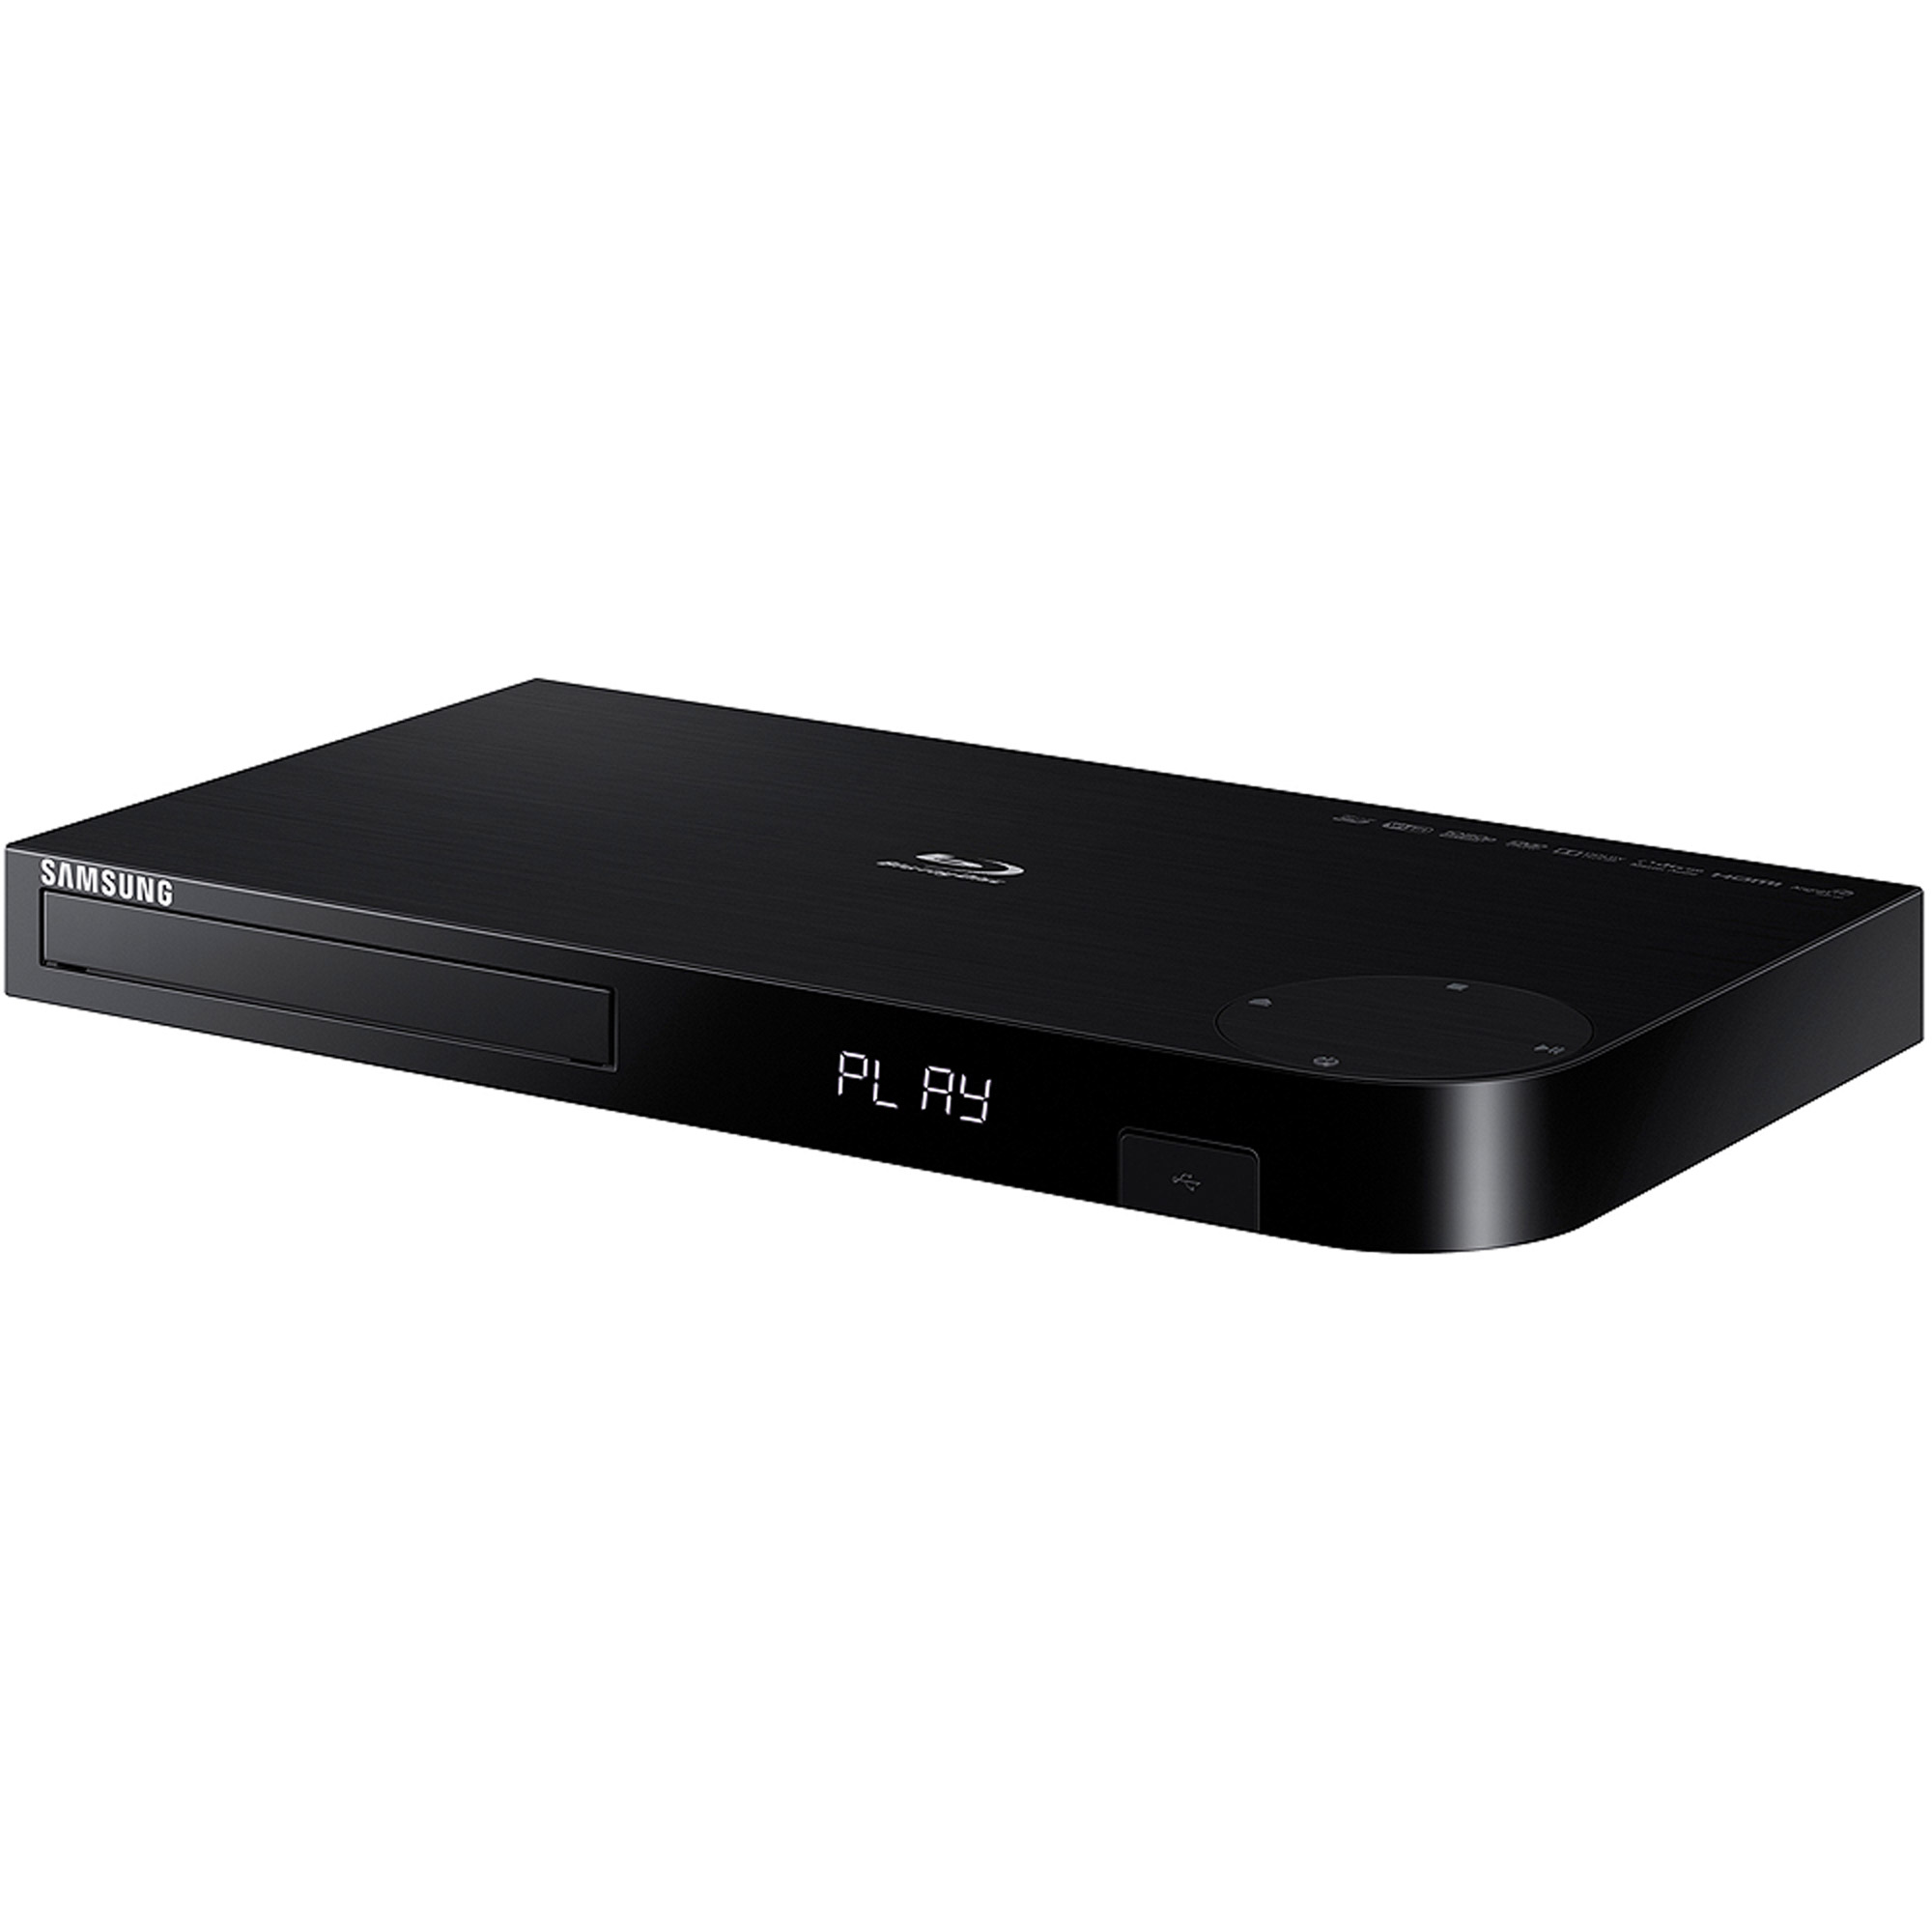 SAMSUNG Blu-ray & DVD Player with 4K UHD Upscaling, WiFi Streaming - BD-JM63 - image 2 of 4